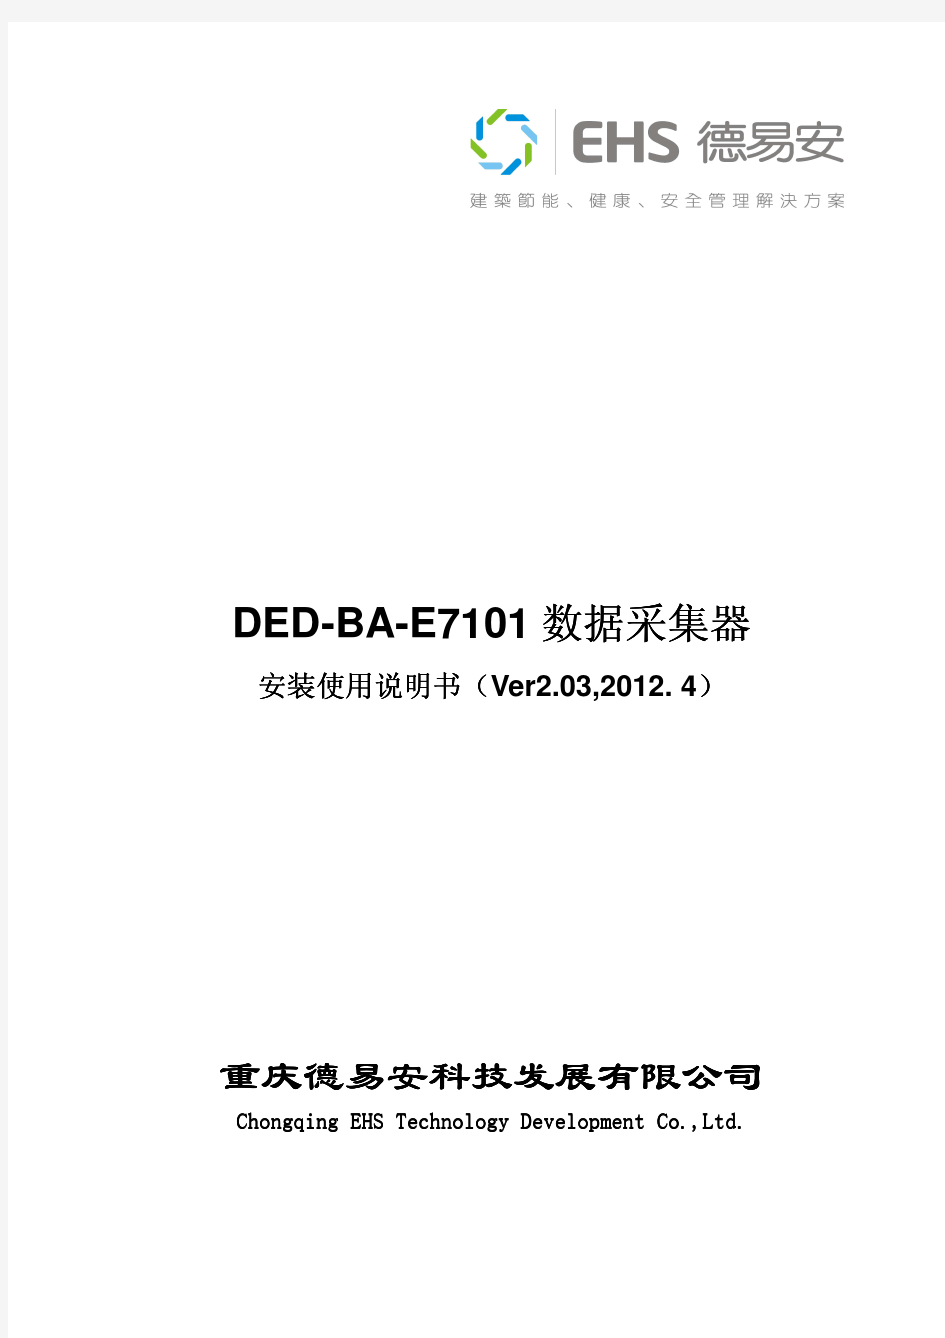 DED-BA-E7101数据采集器安装使用说明书v2.03,201204